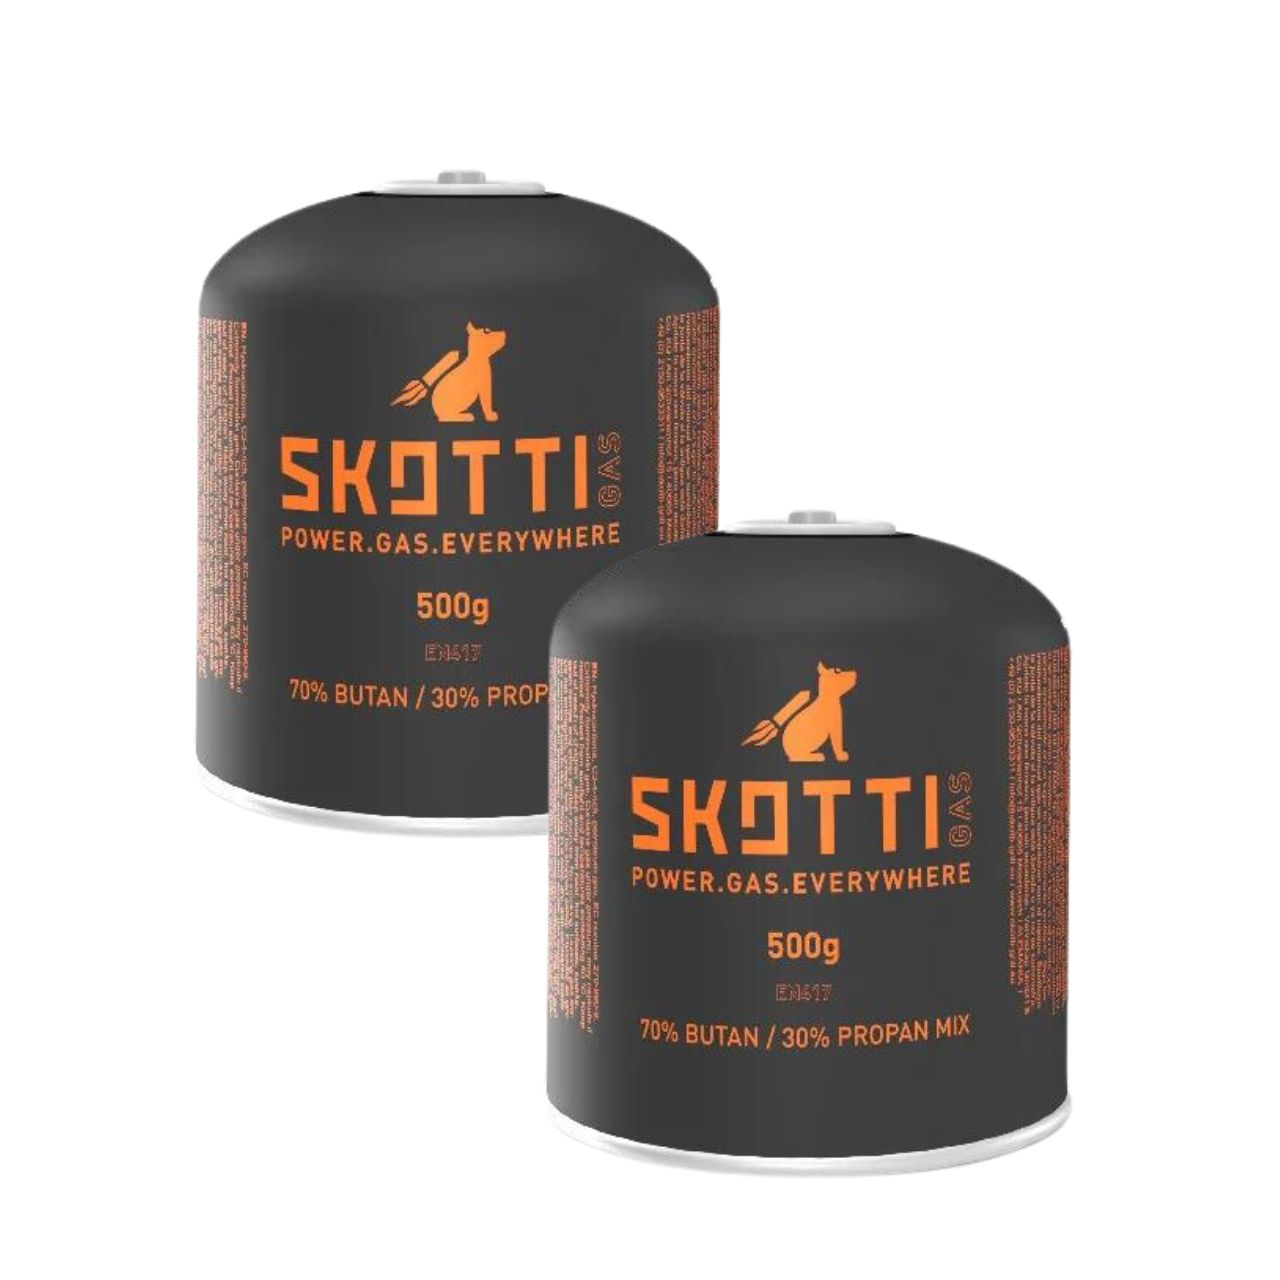 Skotti 2.0 + 2x Skotti Gaskartusche, transportabler & klappbarer Campinggrill - schnell aufbaubar